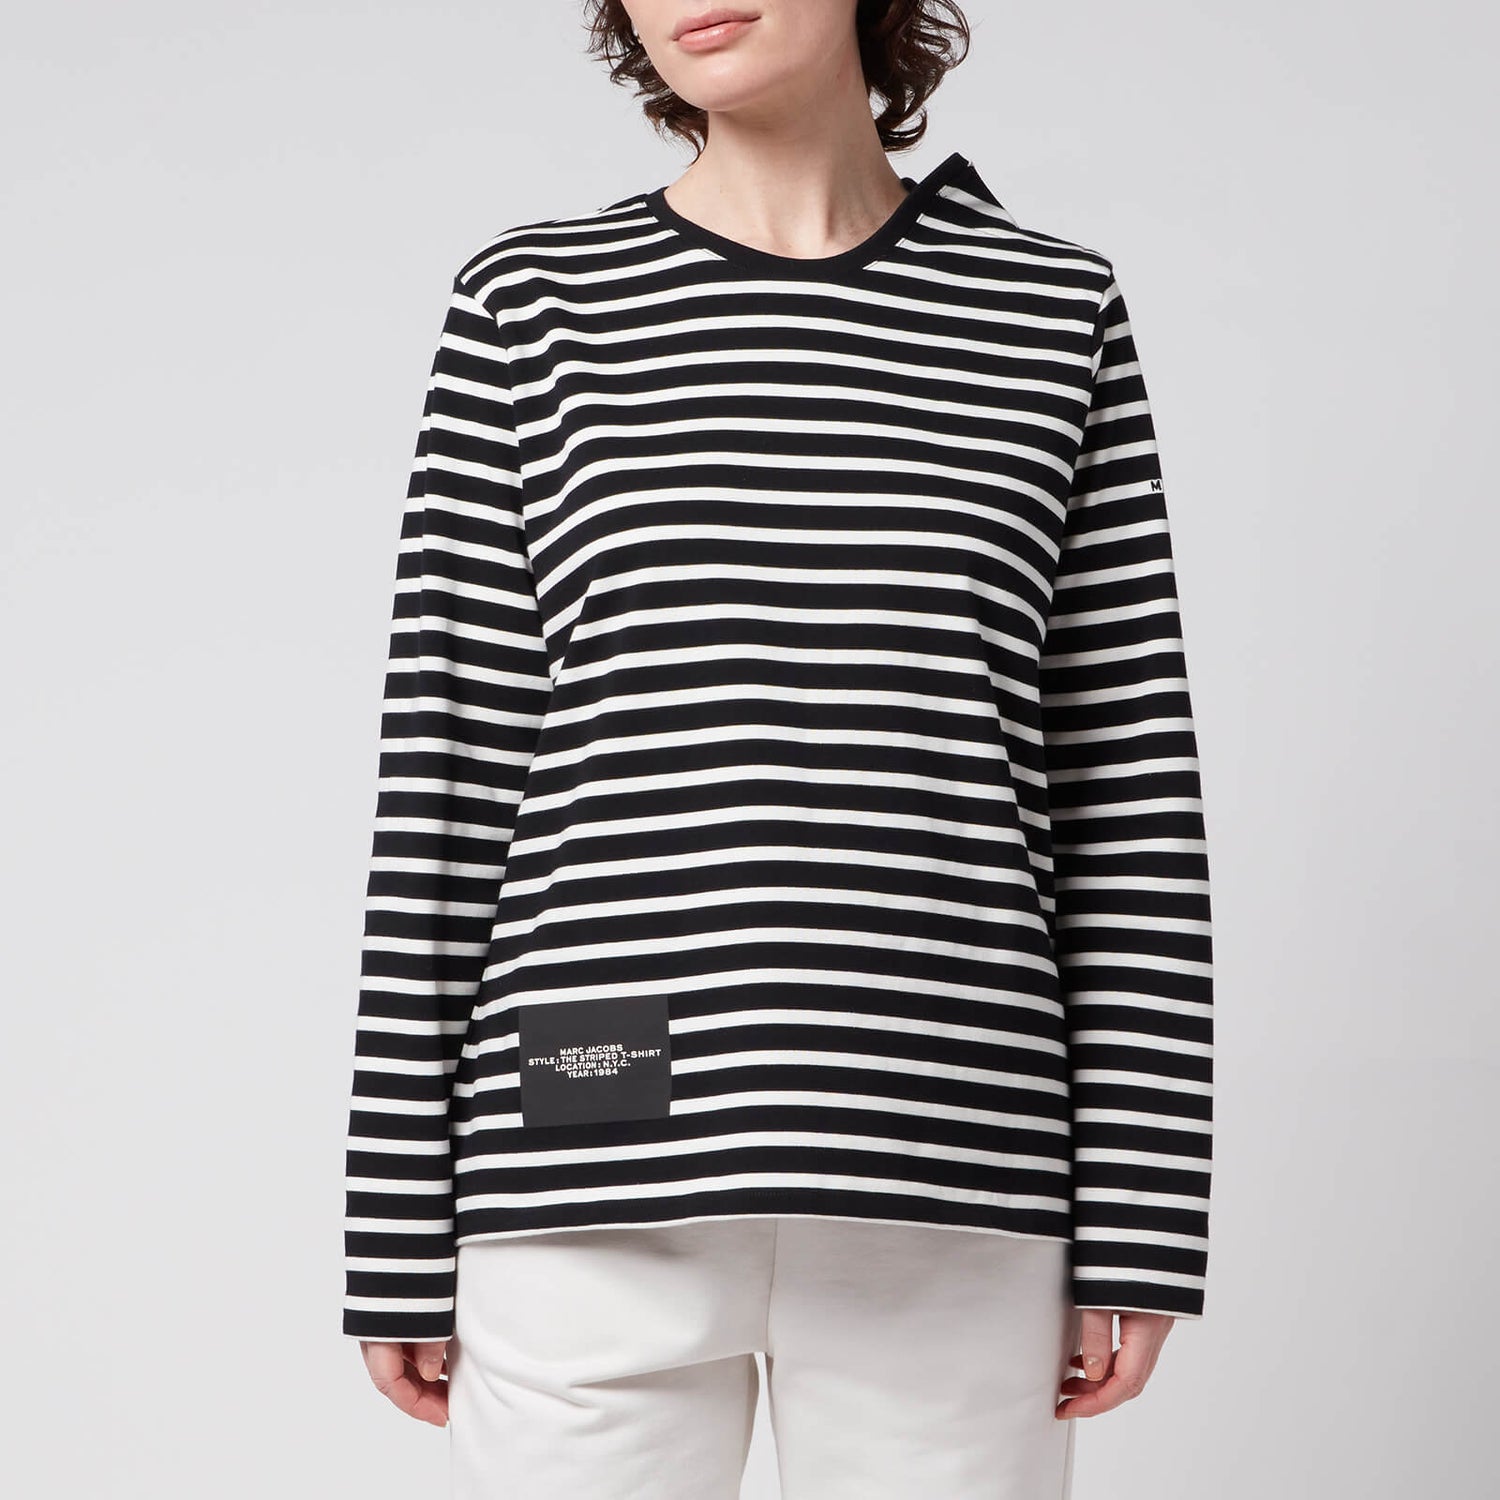 Marc Jacobs Women's The Striped T-Shirt - Black Multi - M